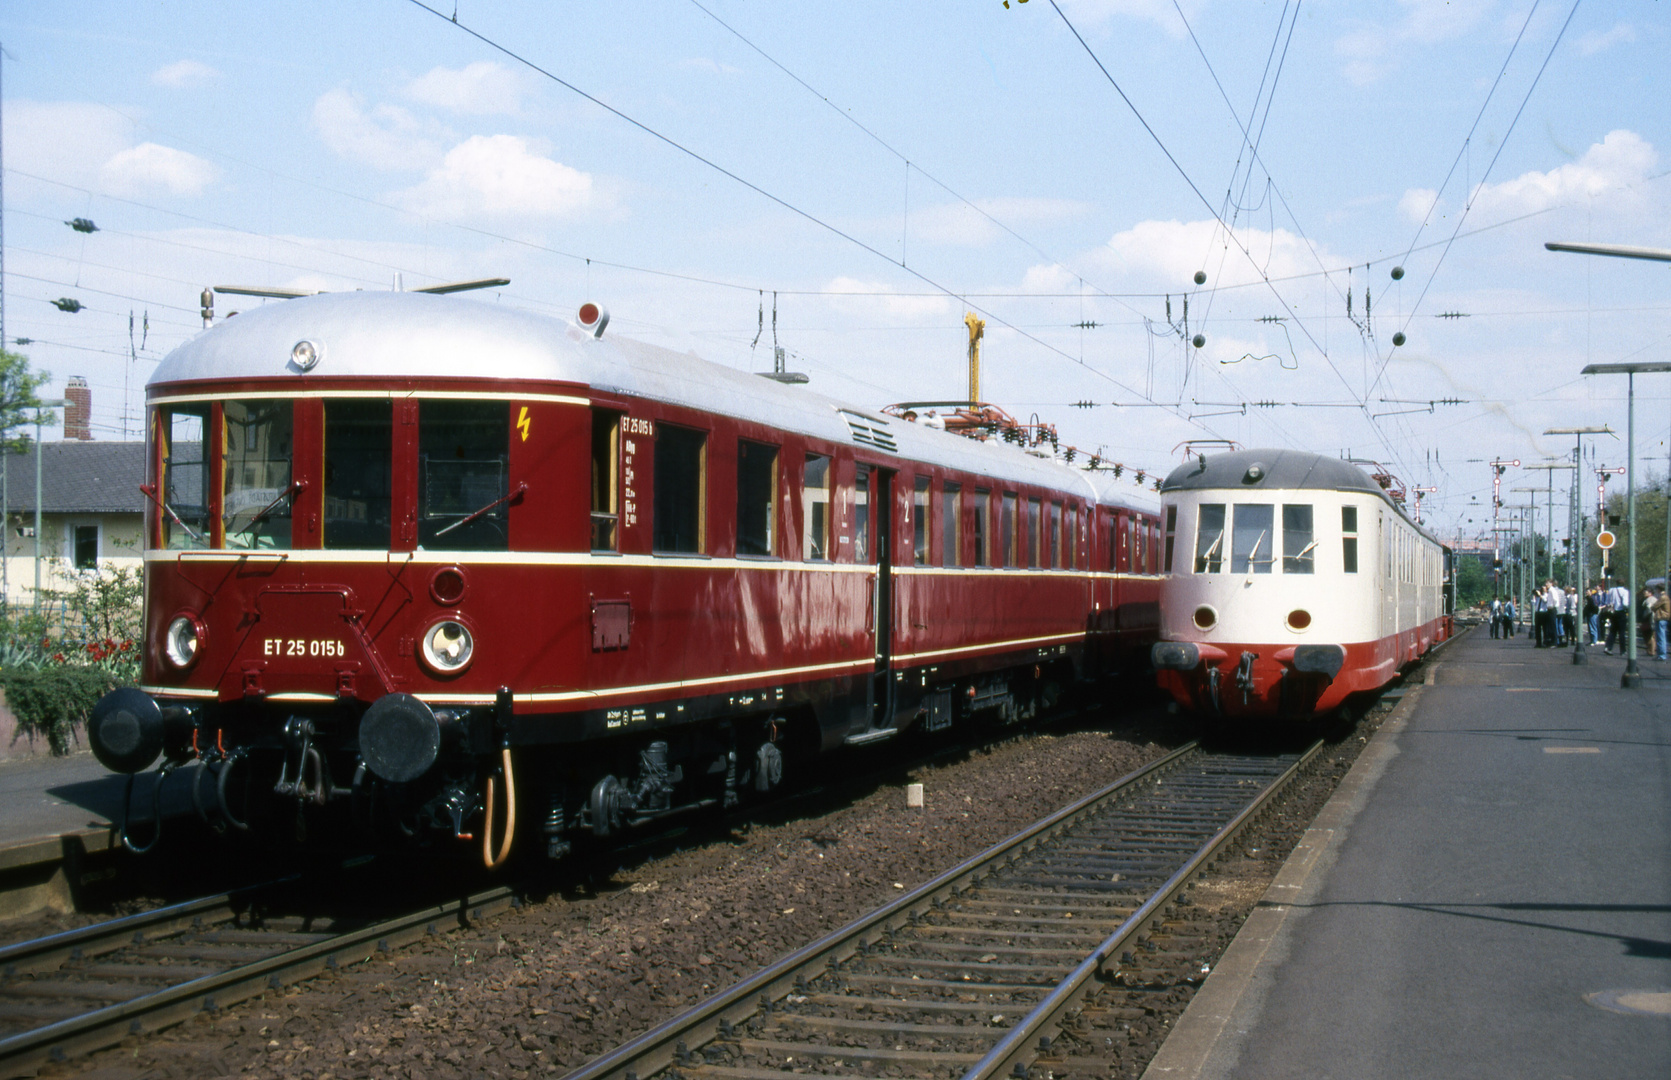 ET 25 015a,b trif´t ET11 in Neustadt/Wstr.